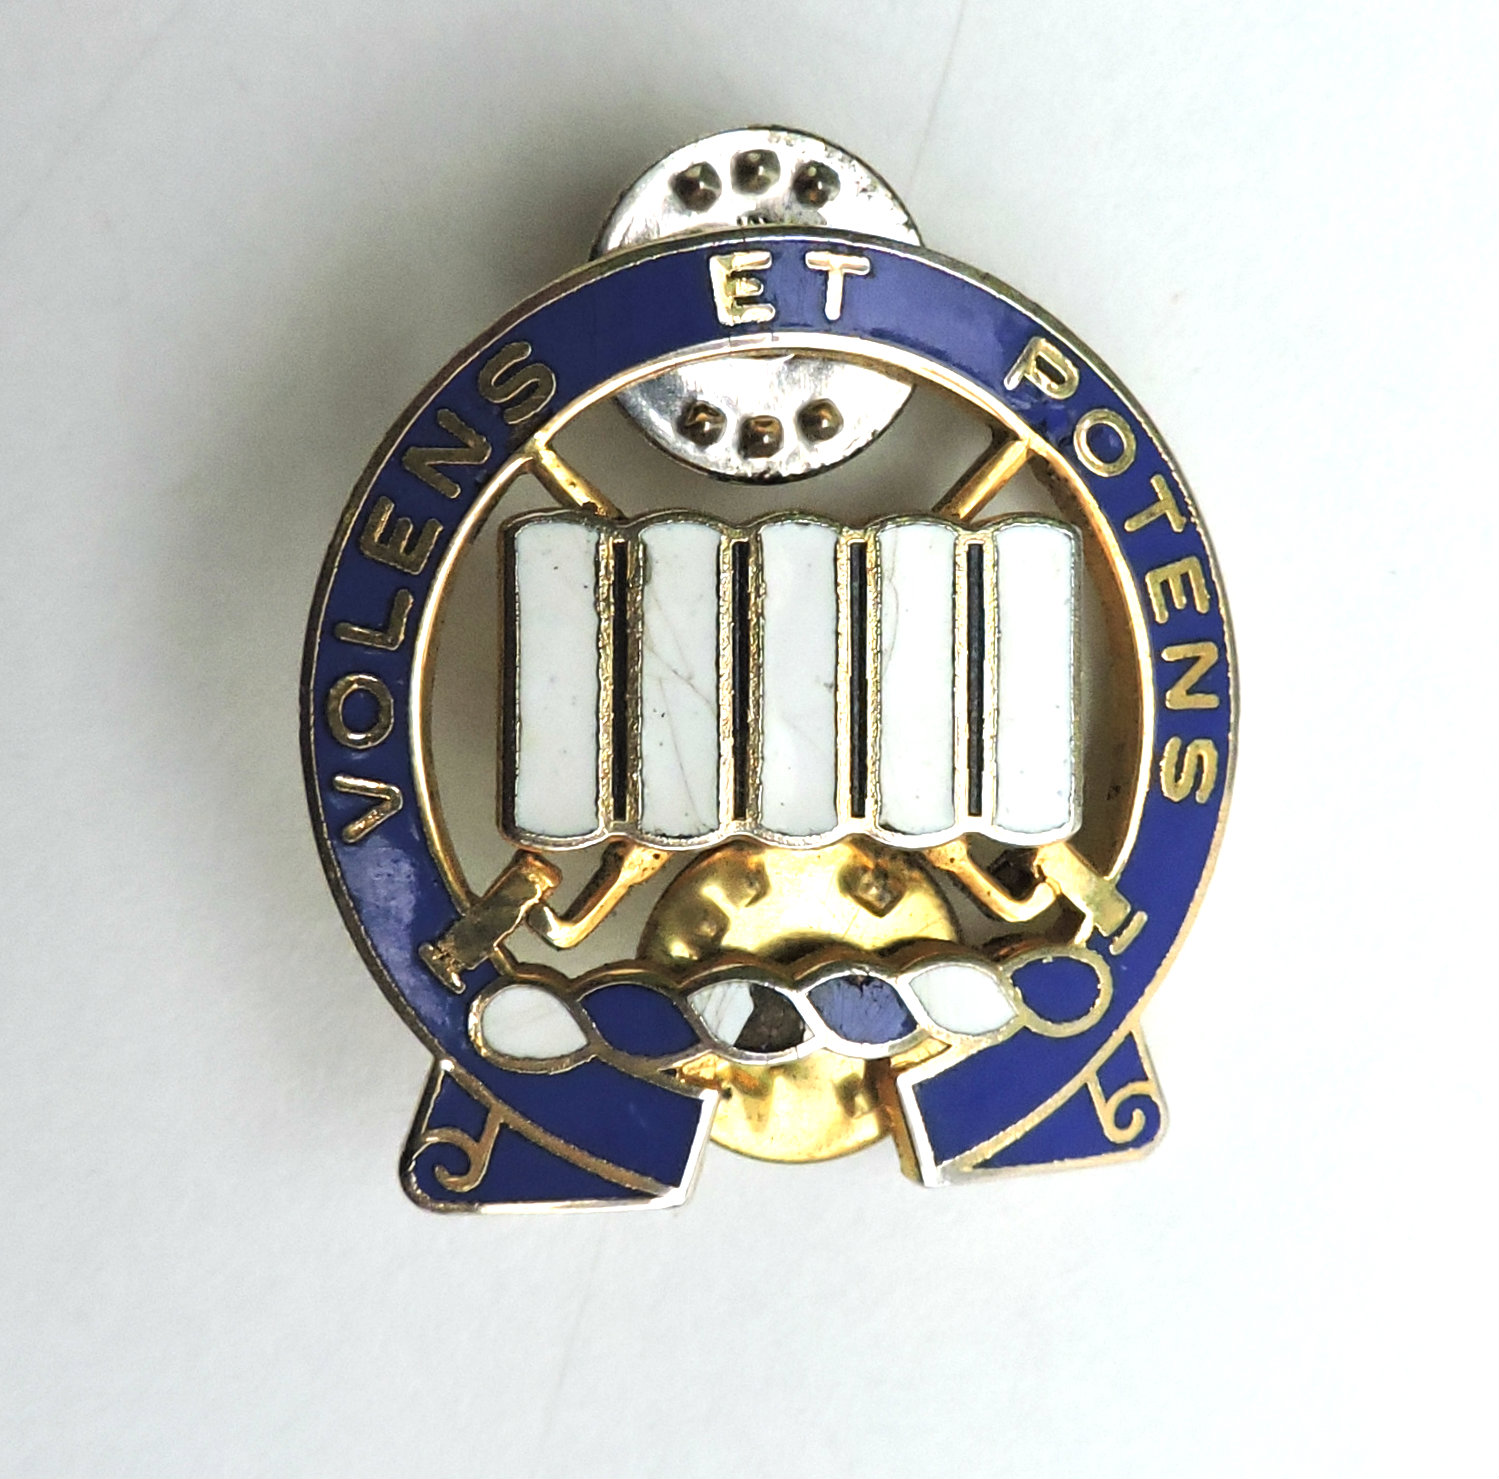 Distinctive insignia  7th infantry regiment